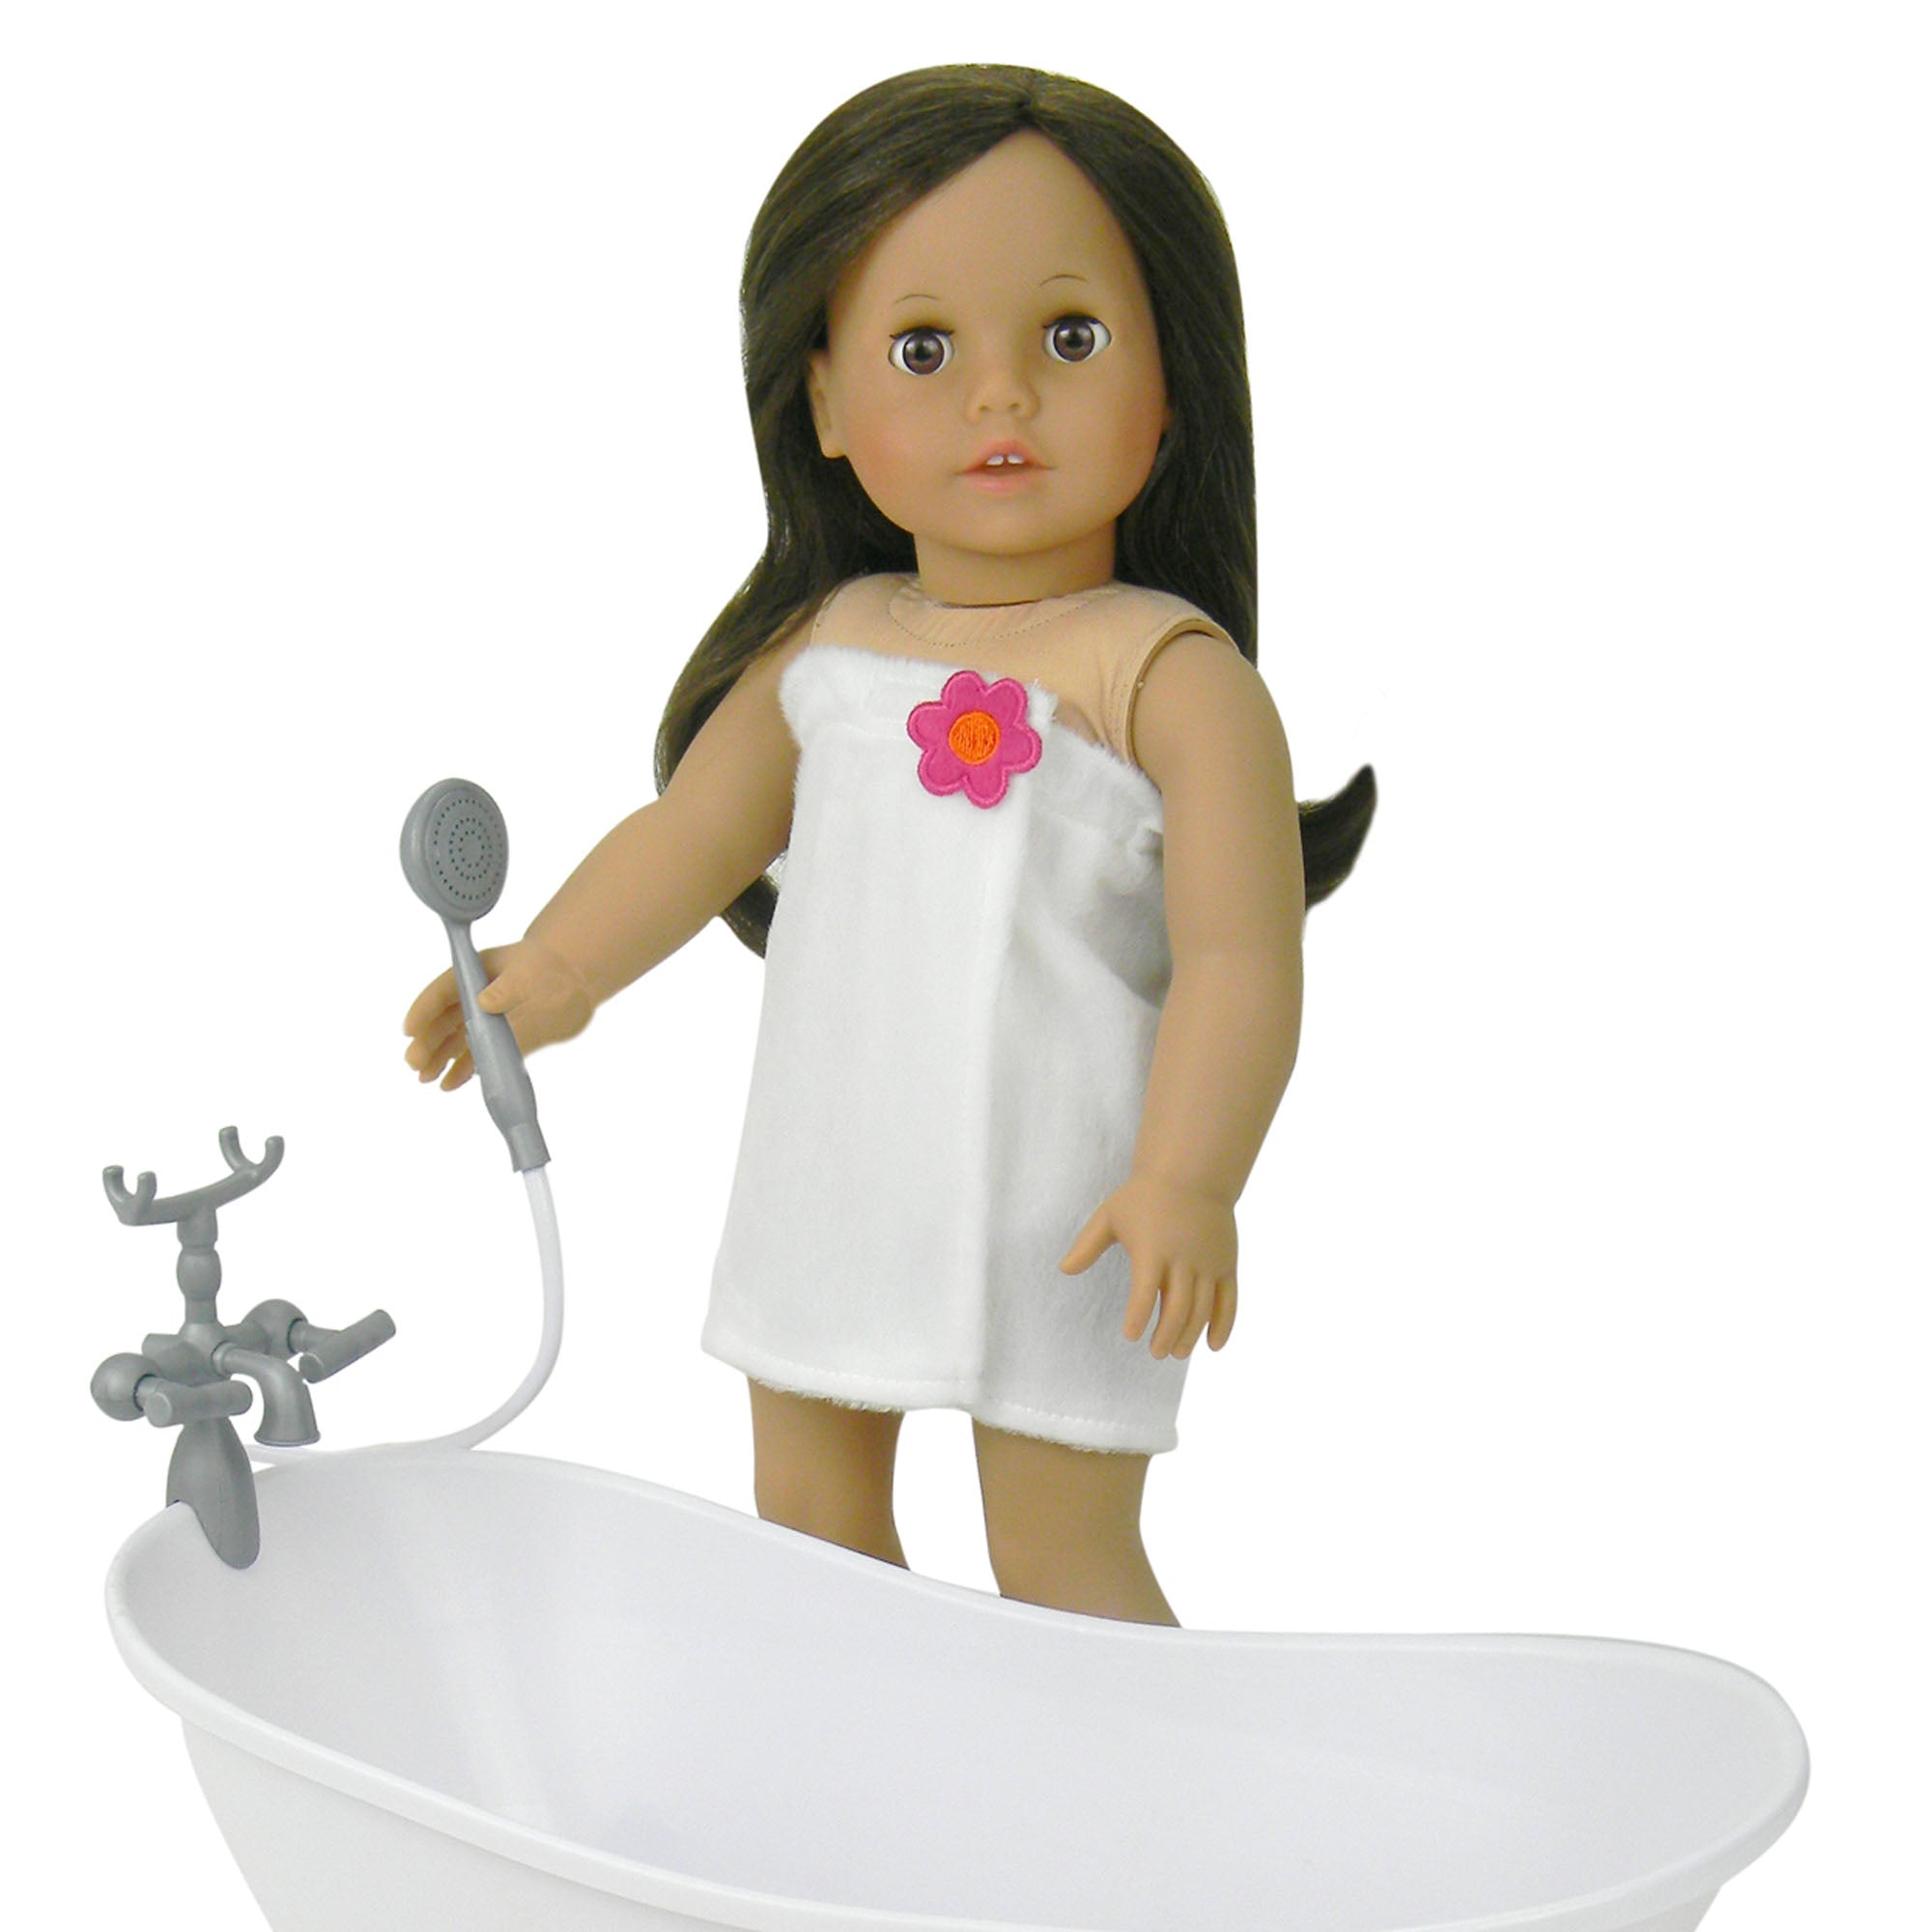 Sophia's 4 Piece Bath time Set Includes Towel Wrap, Shower Cap, Sponge & Hairbrush for 18" Dolls, White